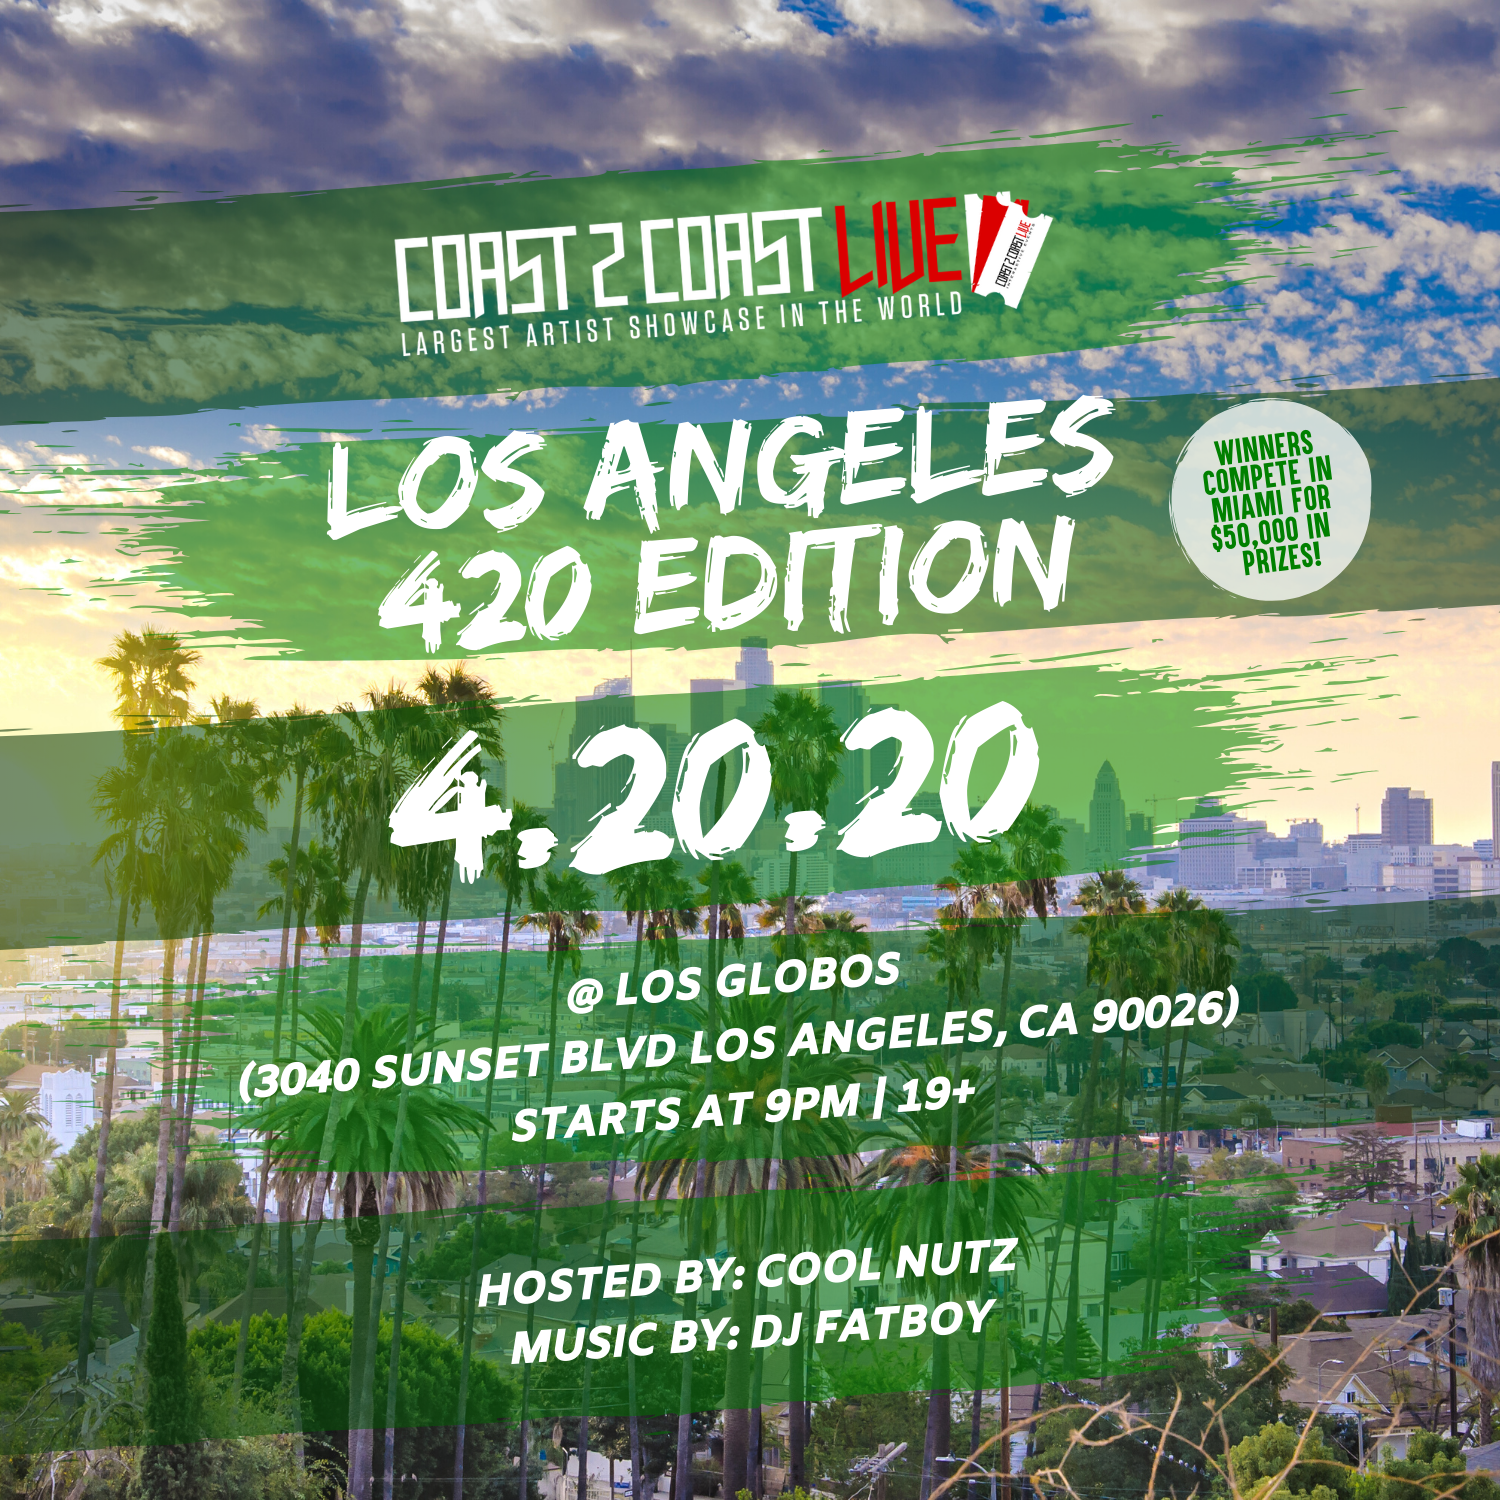 Coast 2 Coast LIVE Showcase Los Angeles - Artists Win $50K In Prizes